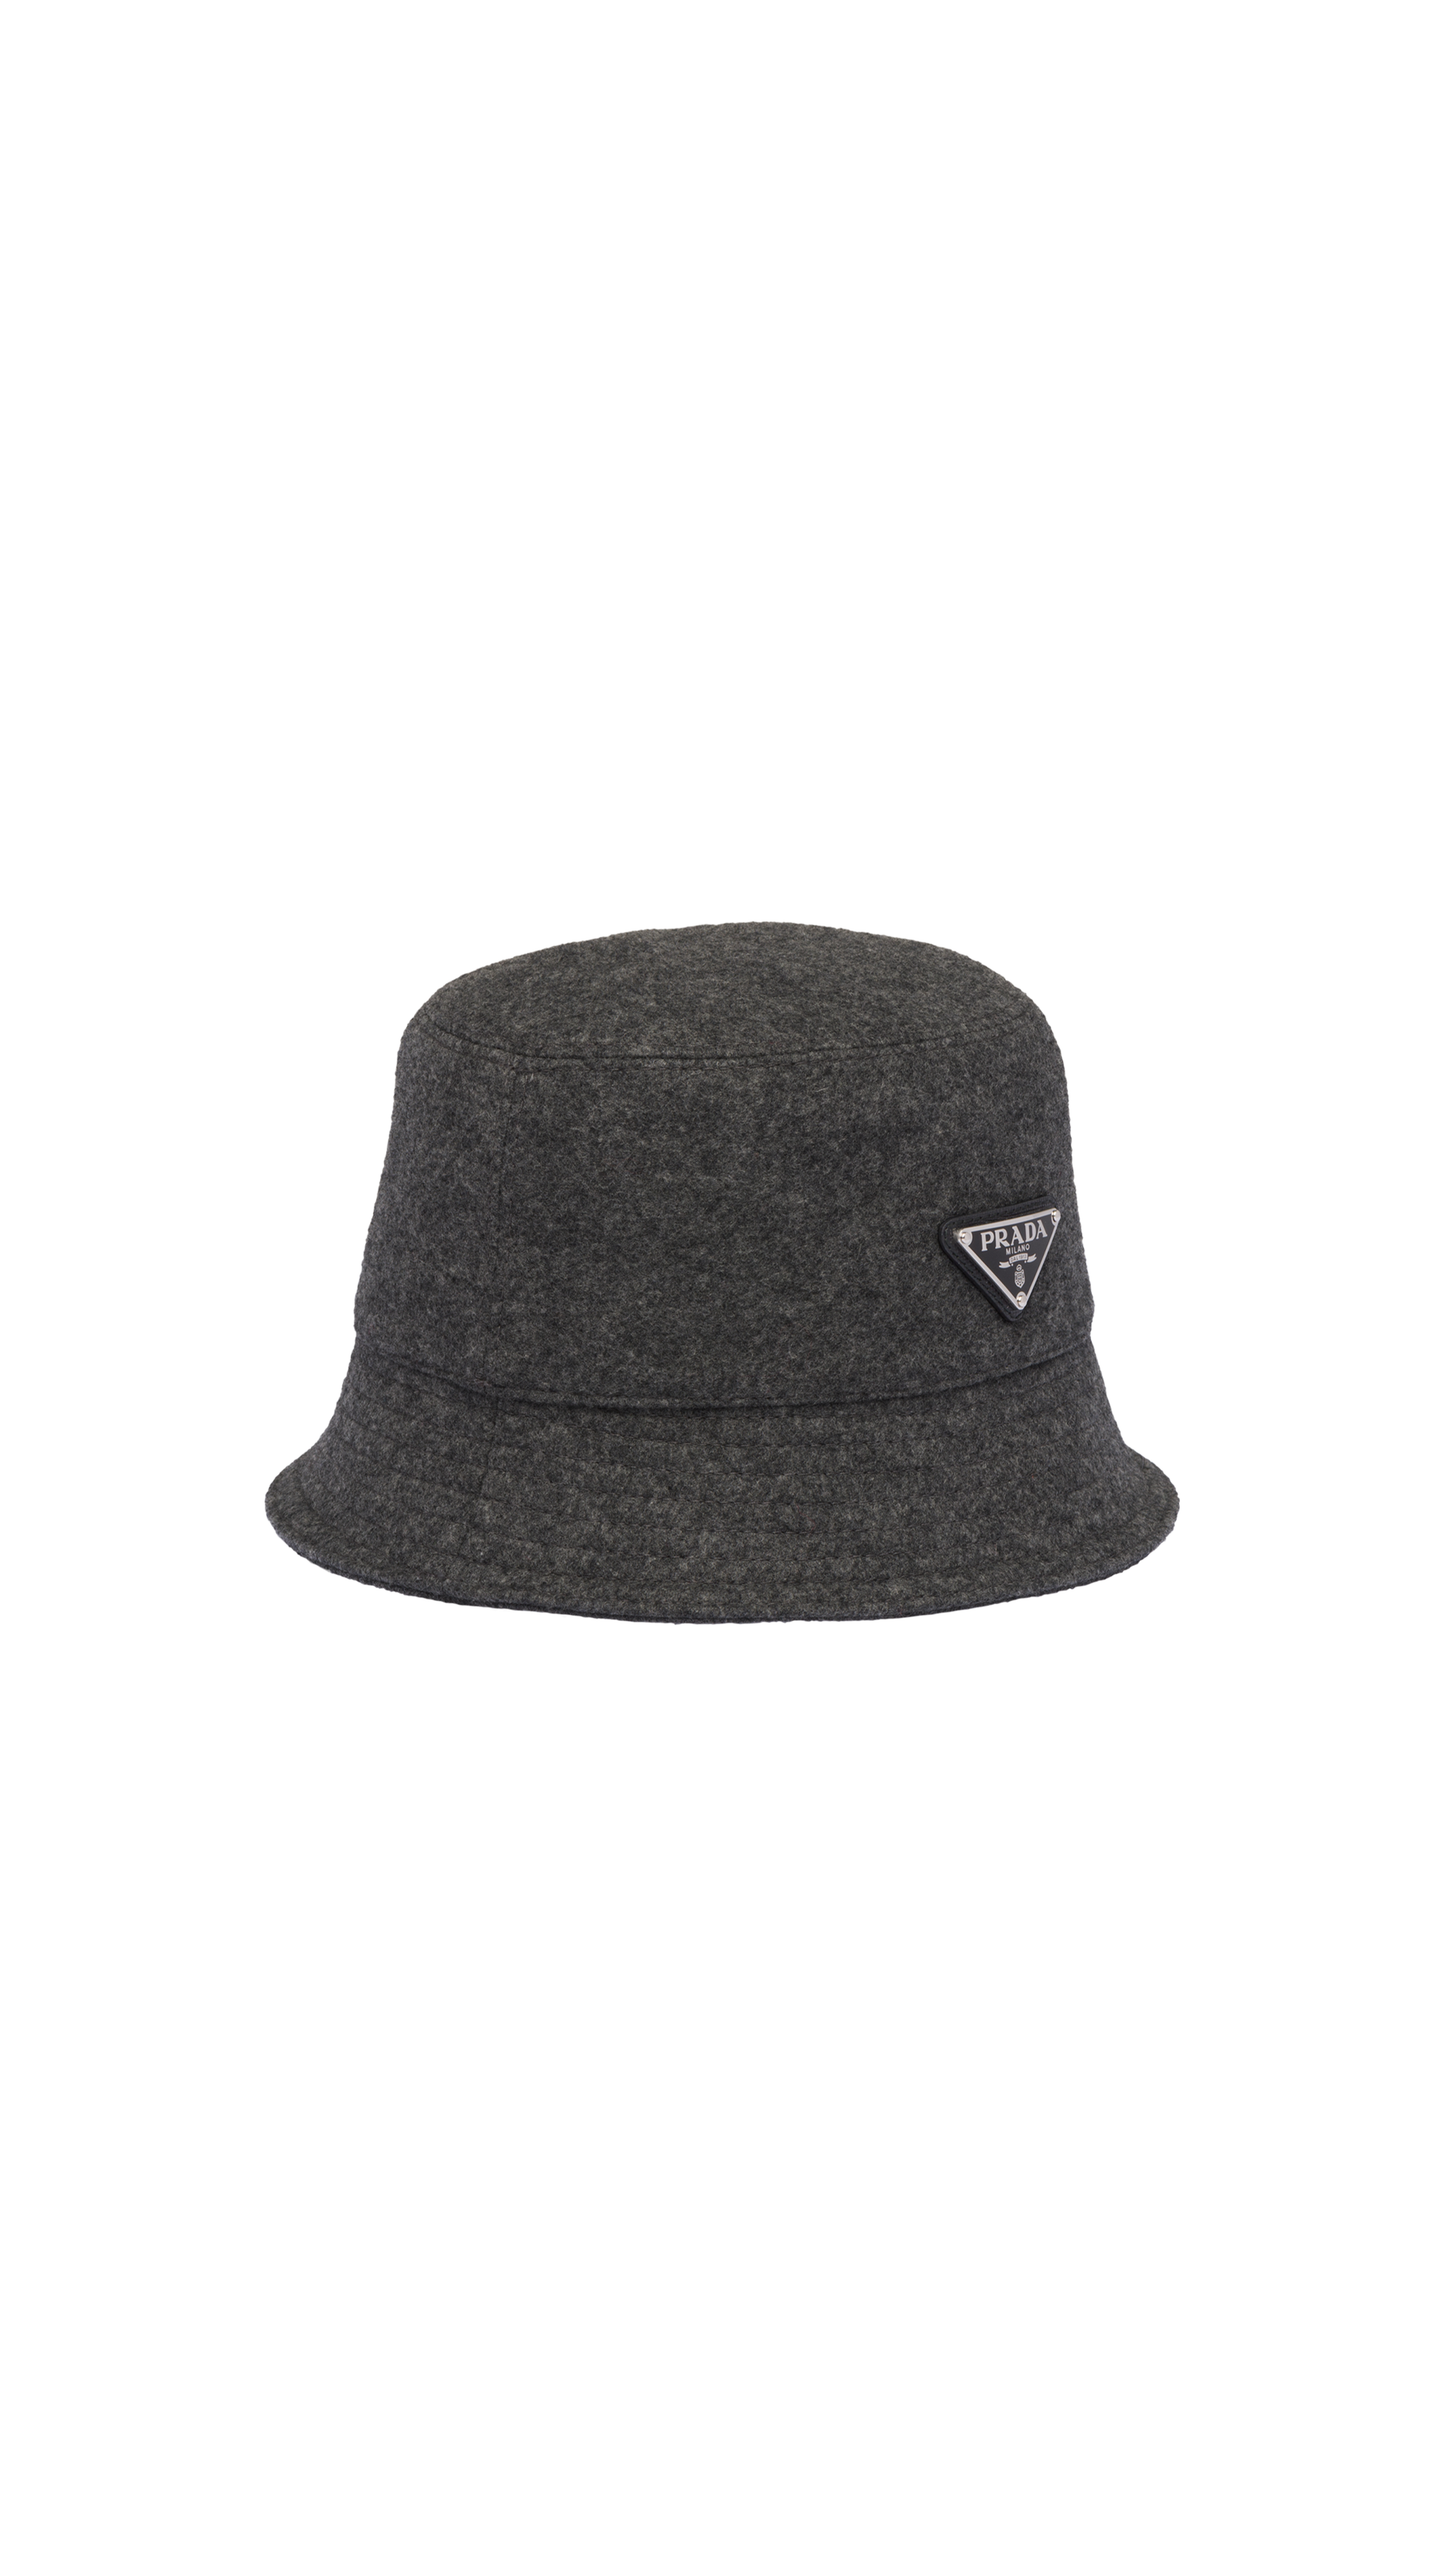 Loden Bucket Hat - Anthracite Gray